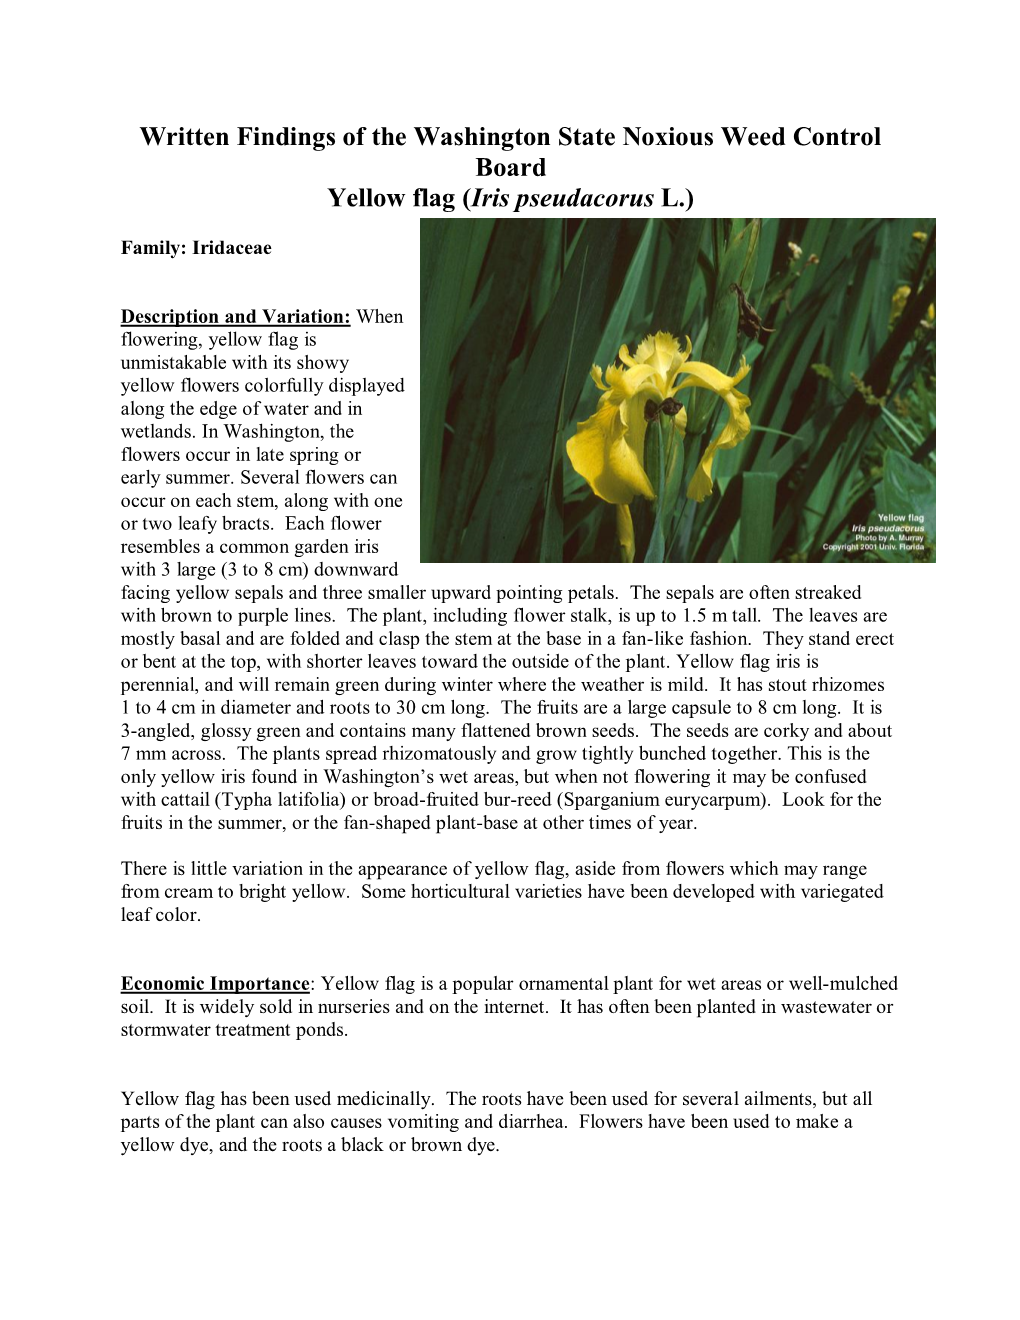 Yellow Flag Iris (Iris Pseudacorus L